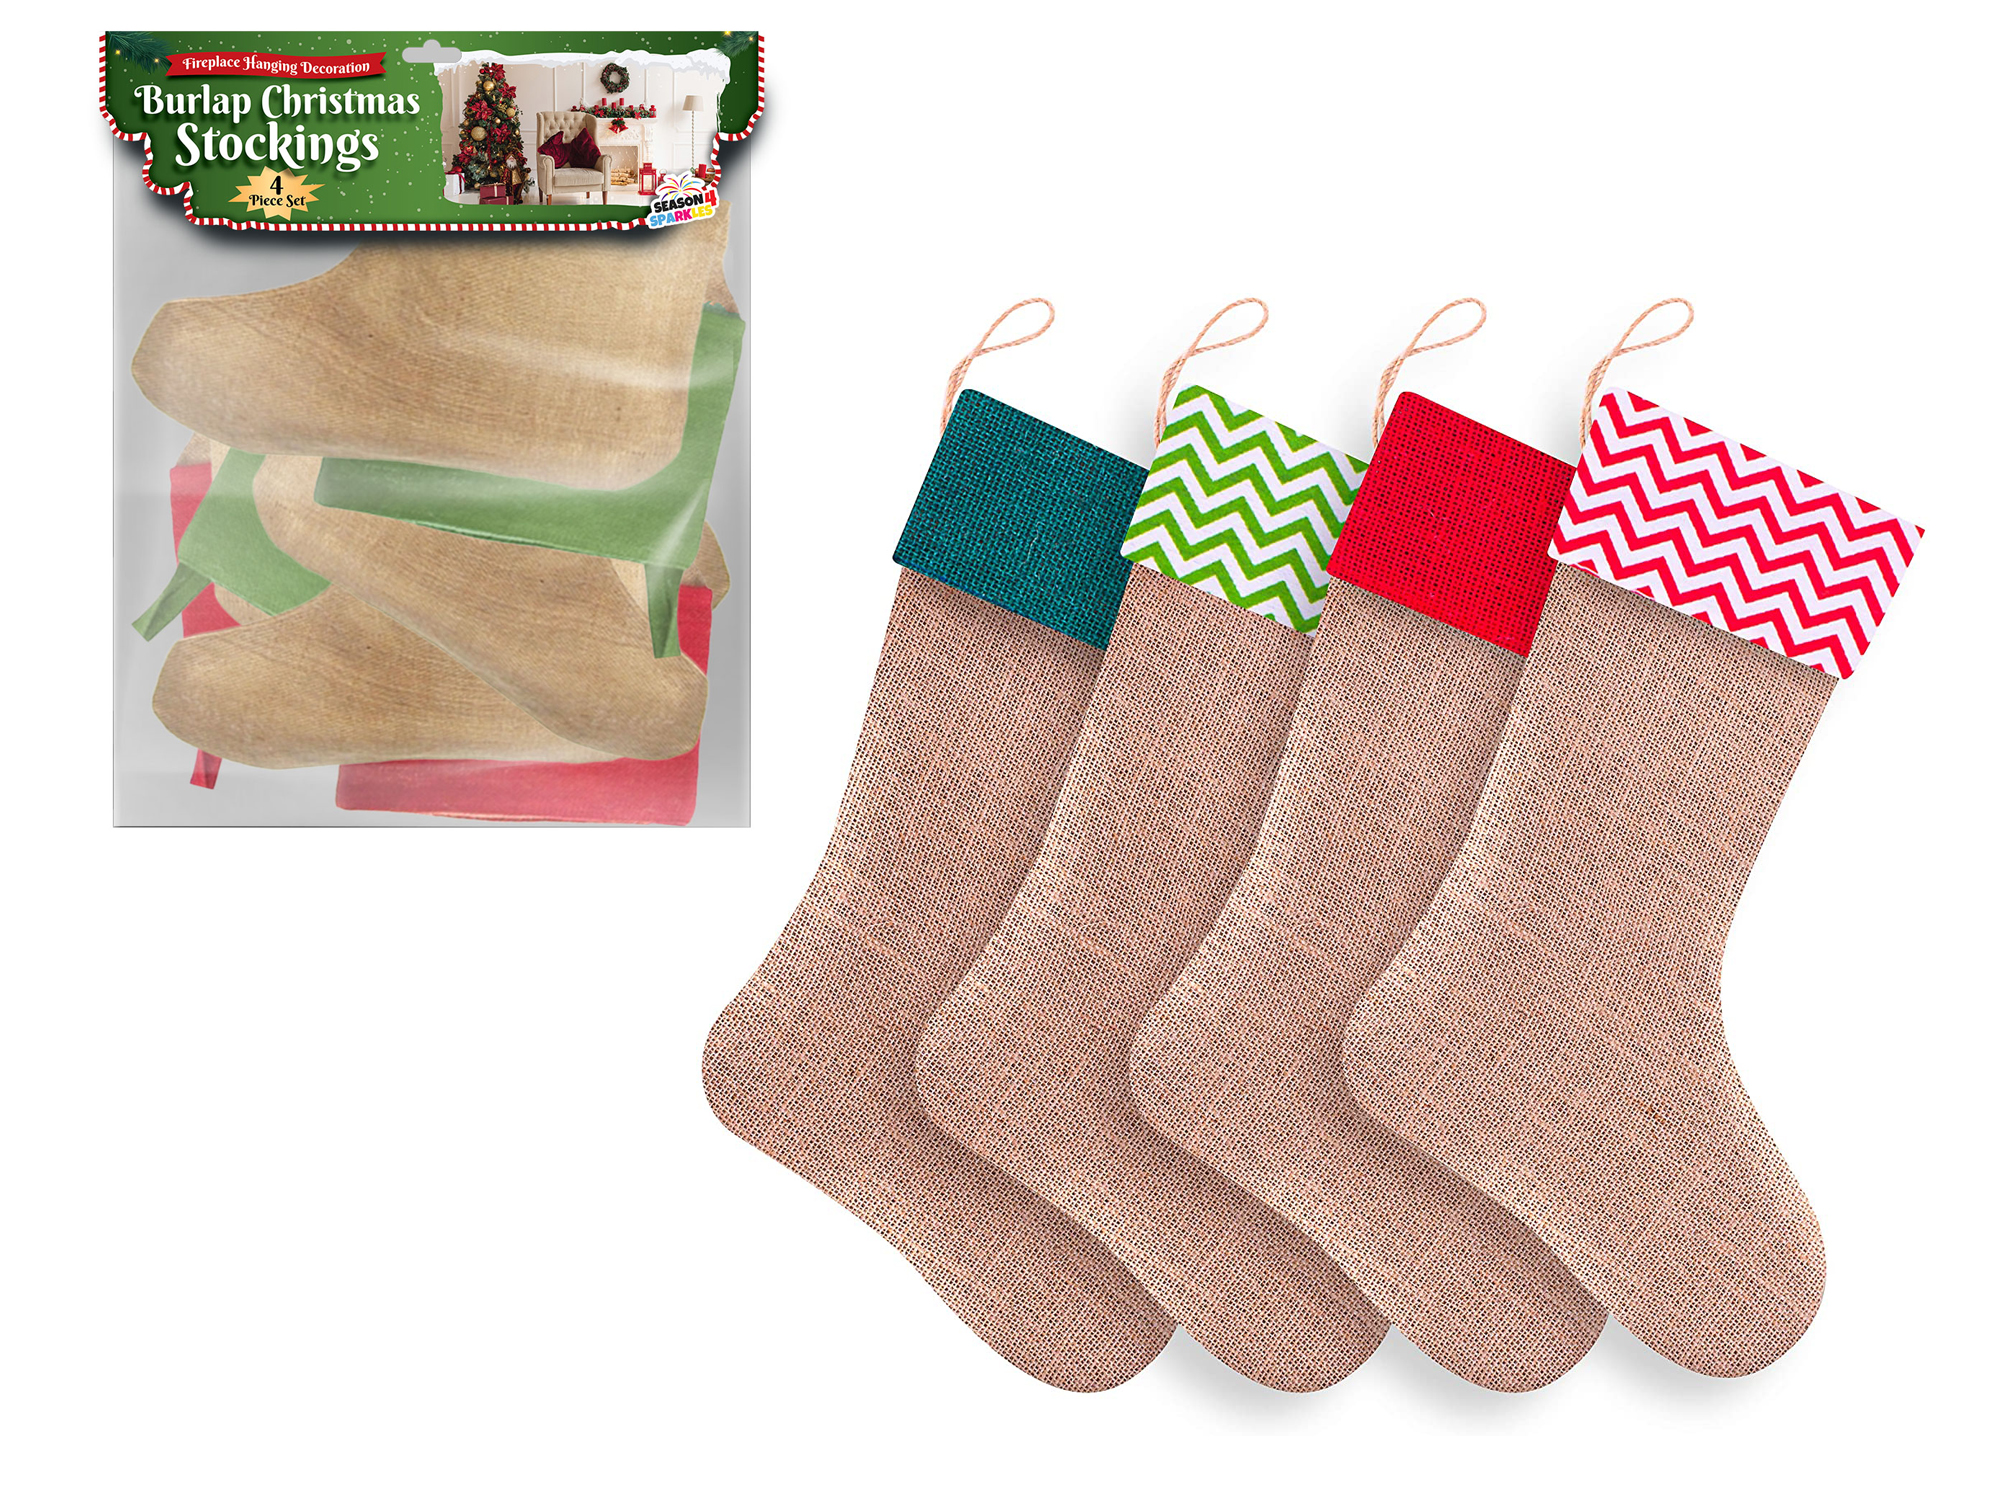 Burlap CHRISTMAS Stockings w/ Chevron & Solid Print - 4-Pack